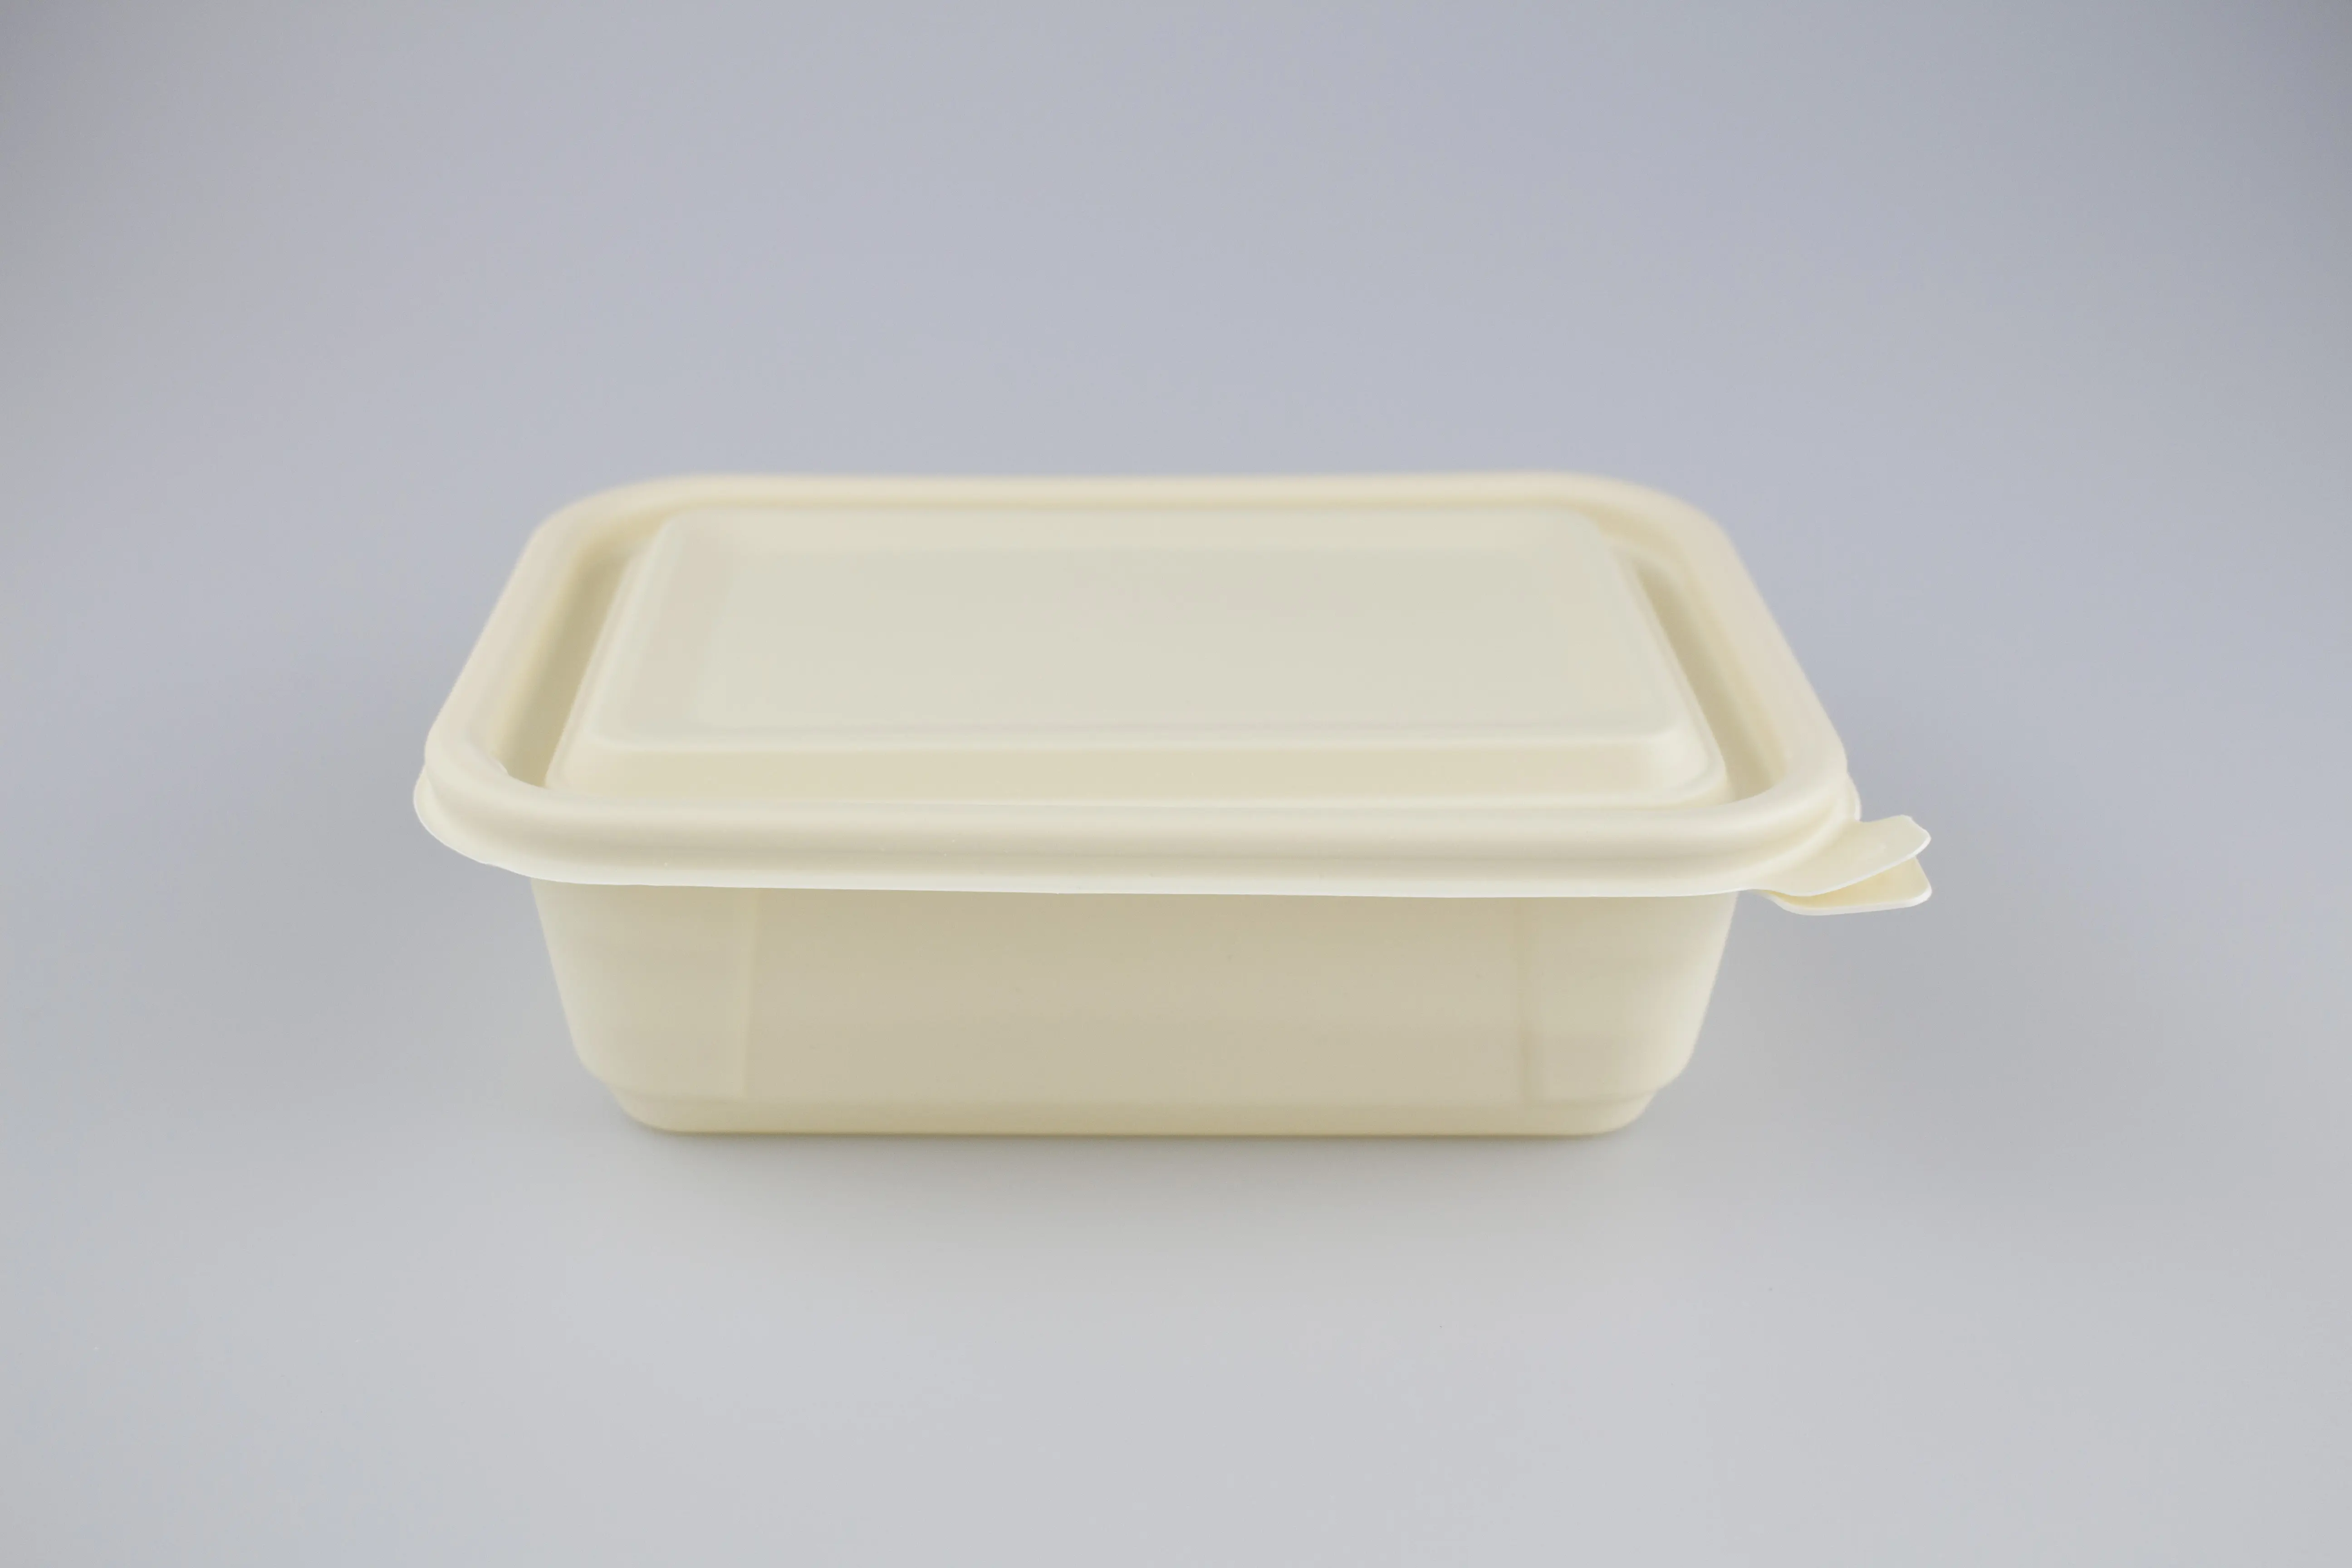 Caja de embalaje de comida rápida biodegradable de alta calidad con tapa, caja de comida para llevar, fiambrera rectangular de 650ml